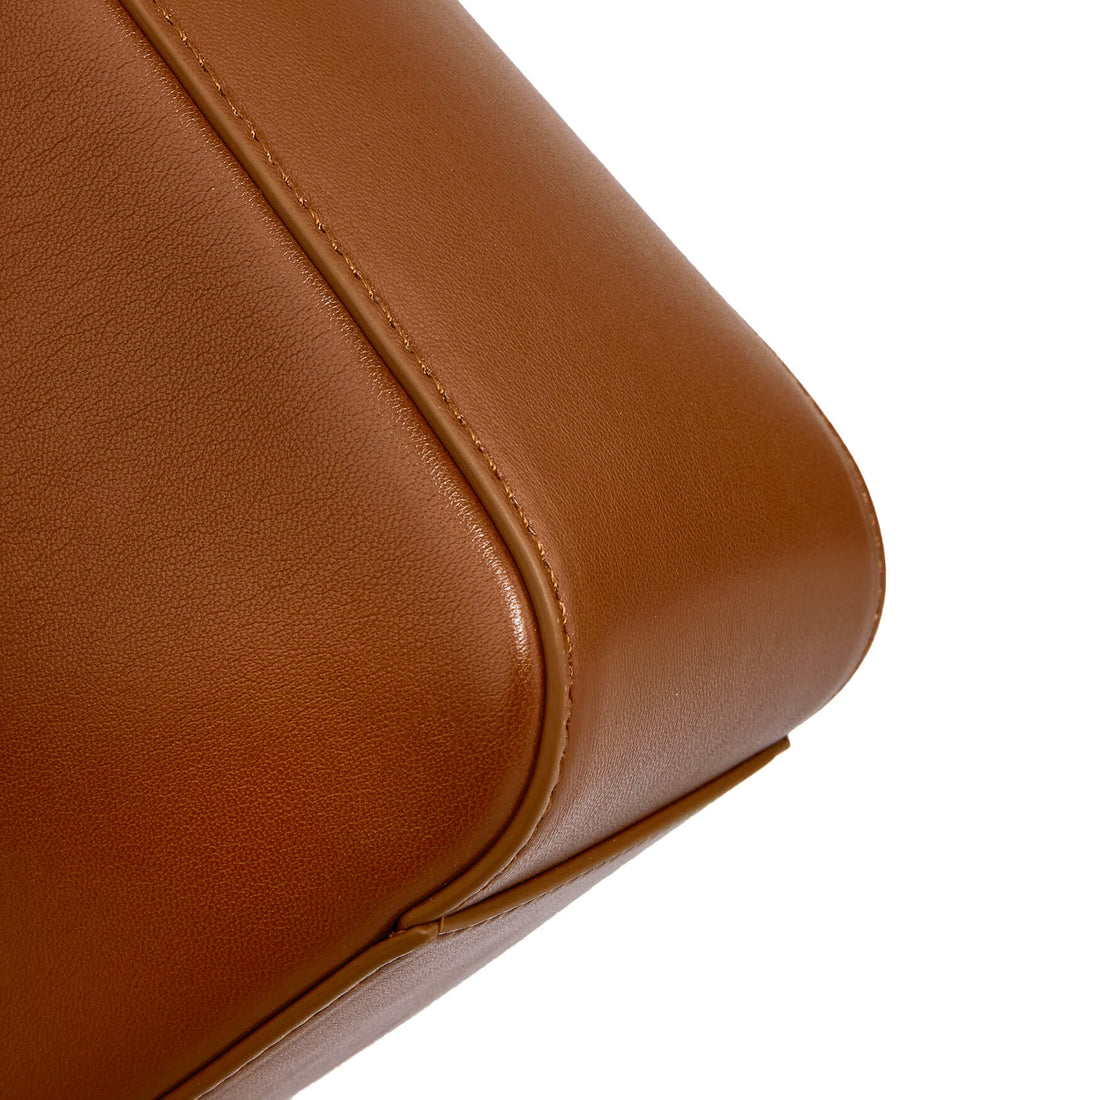 SINBONO Square Shoulder Bag For Women - Eco-Friendly Leather Bag